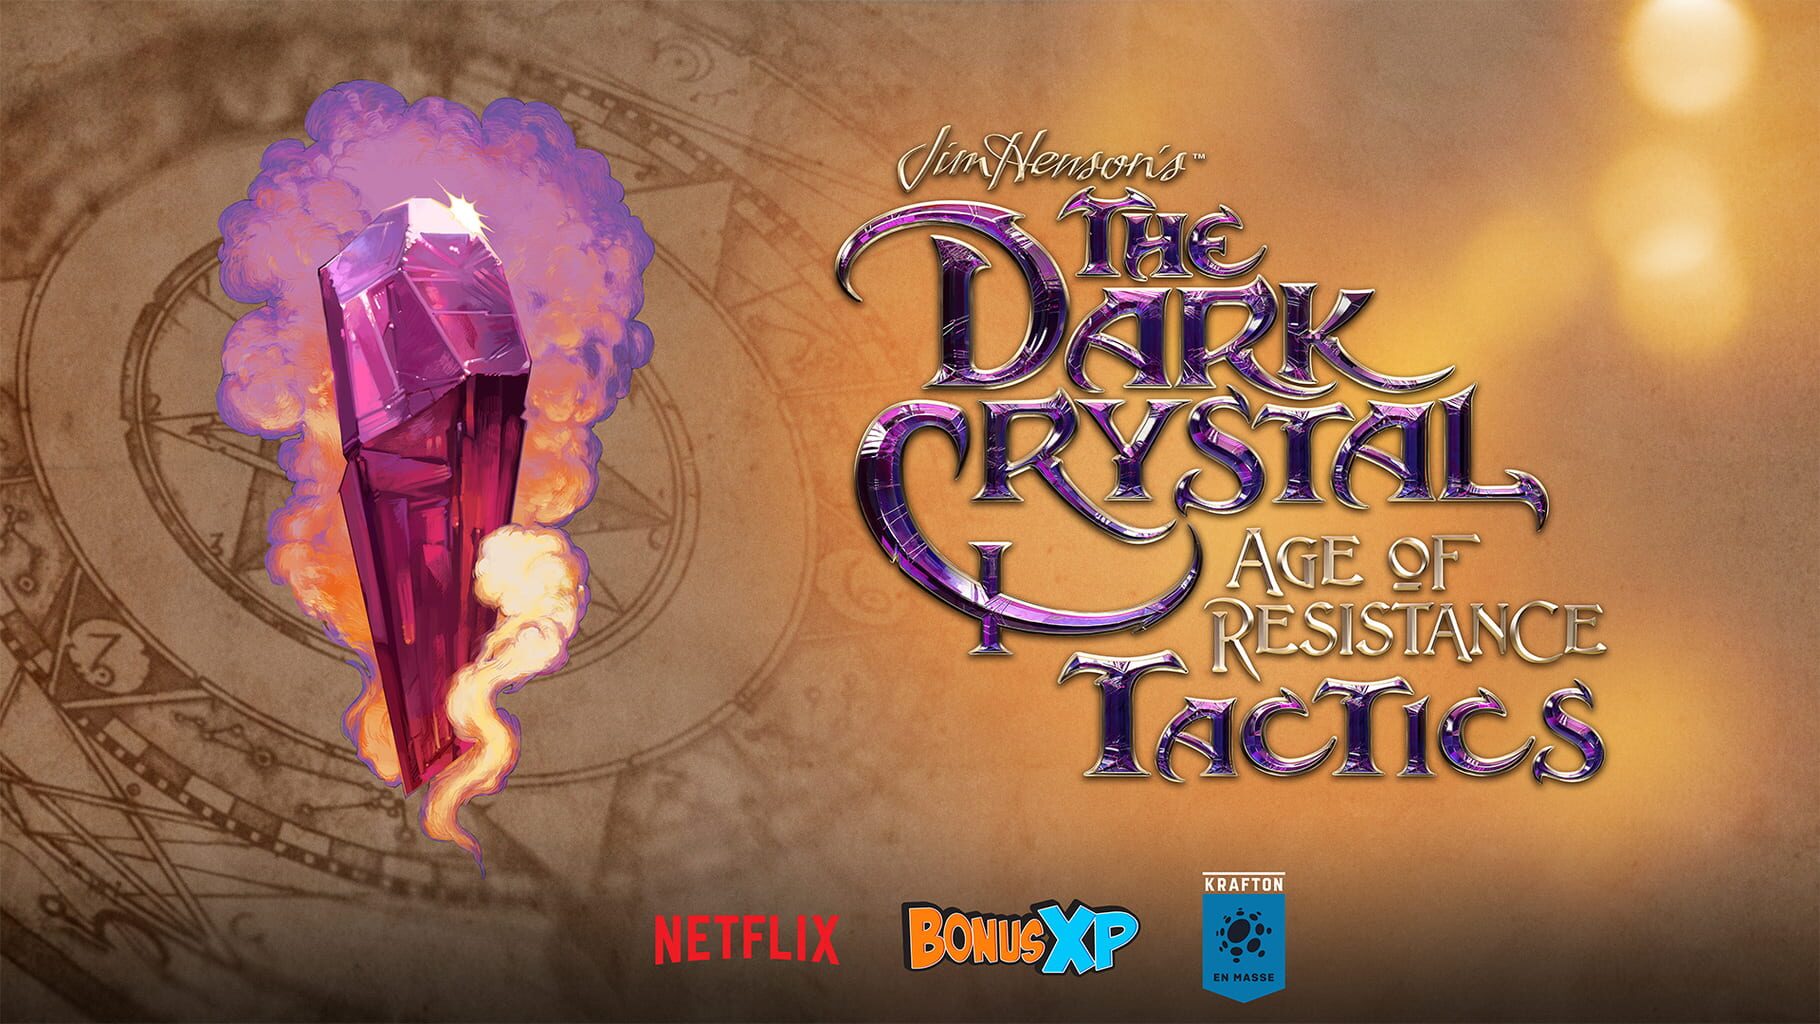 The Dark Crystal: Age of Resistance Tactics artwork